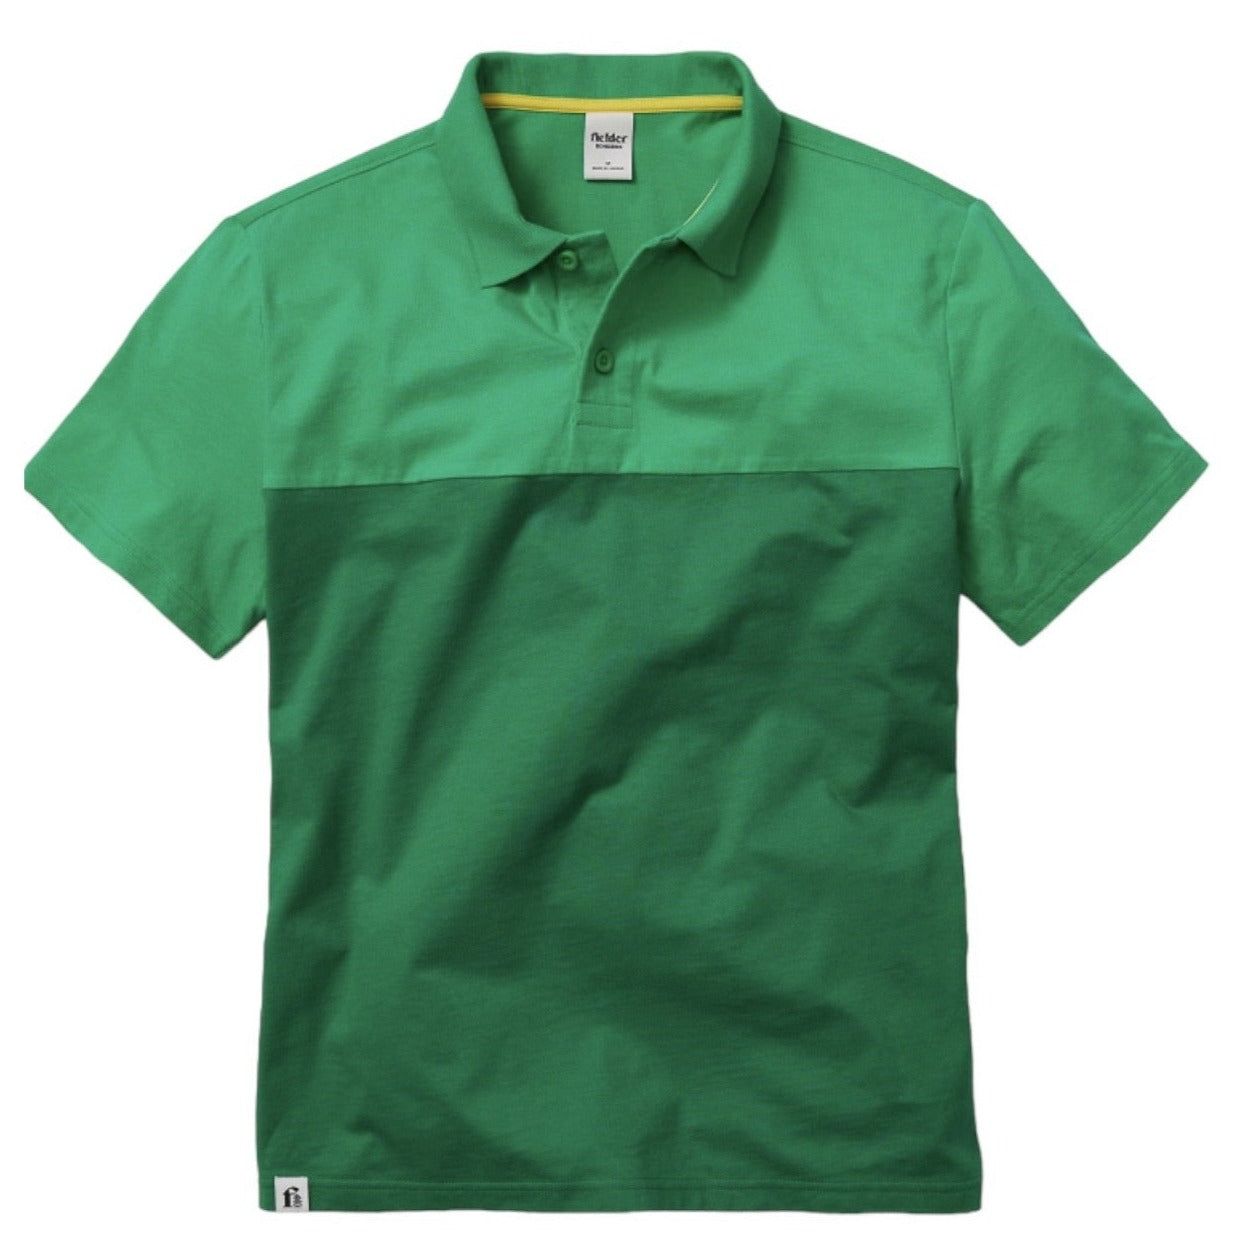 NWT Bonobos Fielder Men's Short Sleeve Colorblock Cotton Polo Shirt, Green LARGE